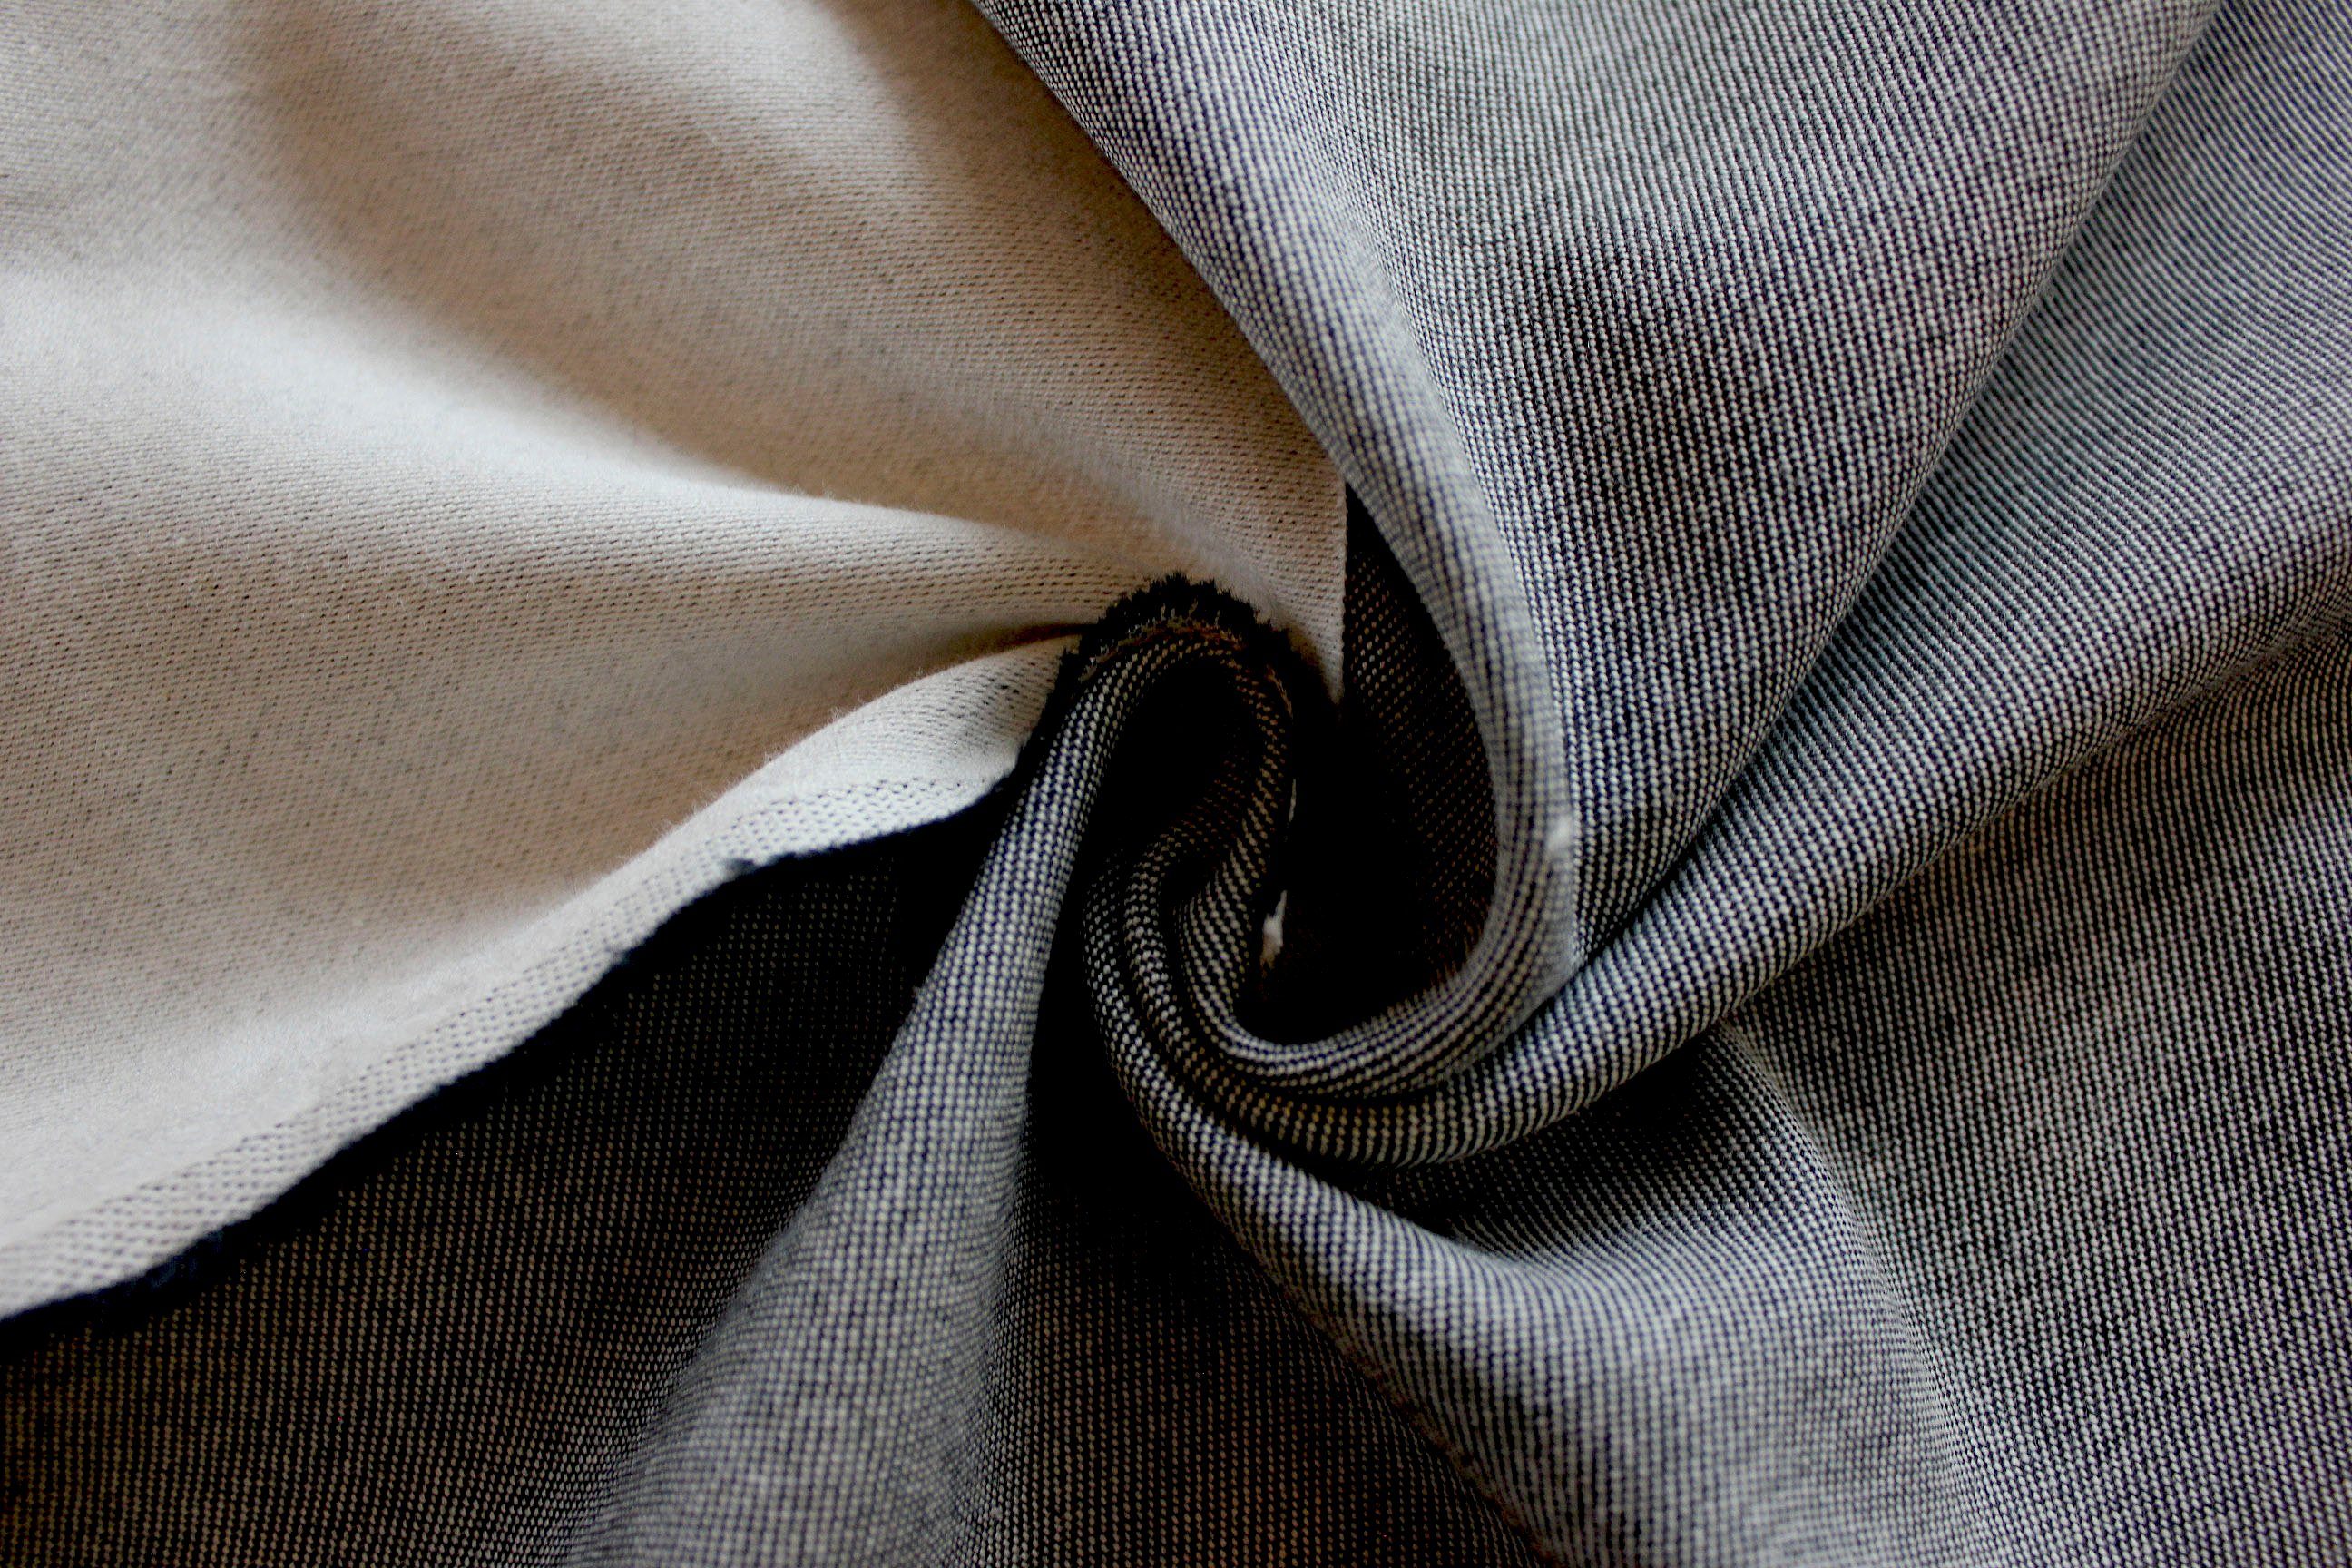 Vorhang Uni Adam, (1 Collection, St), Light blickdicht Kräuselband schwarz